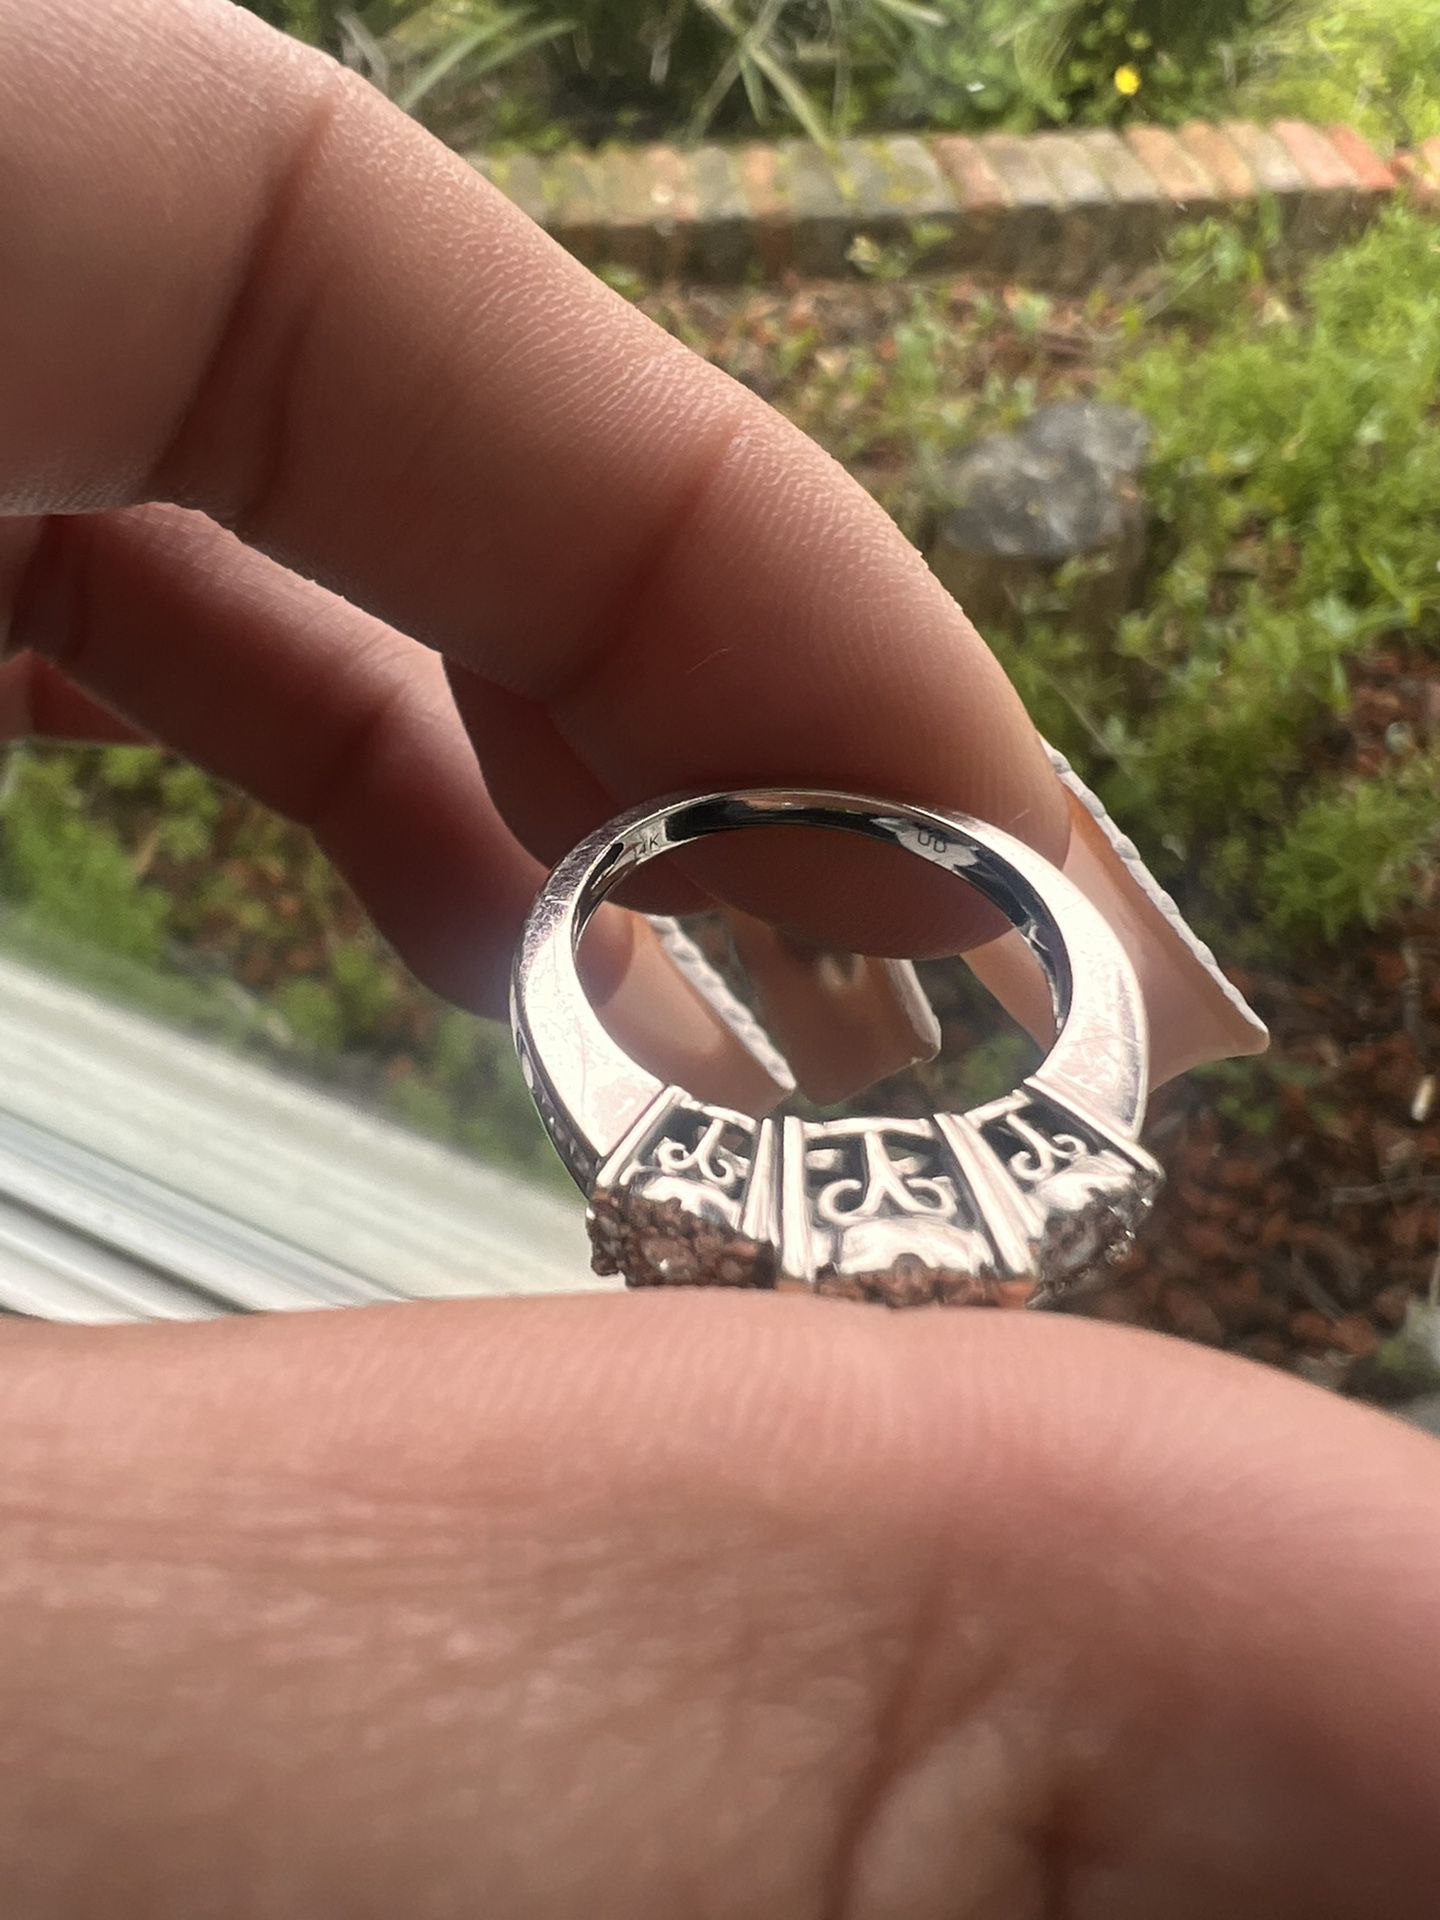 Diamond Three Stone Engagement Ring (3/4 ct. t.w.) in 14k Gold